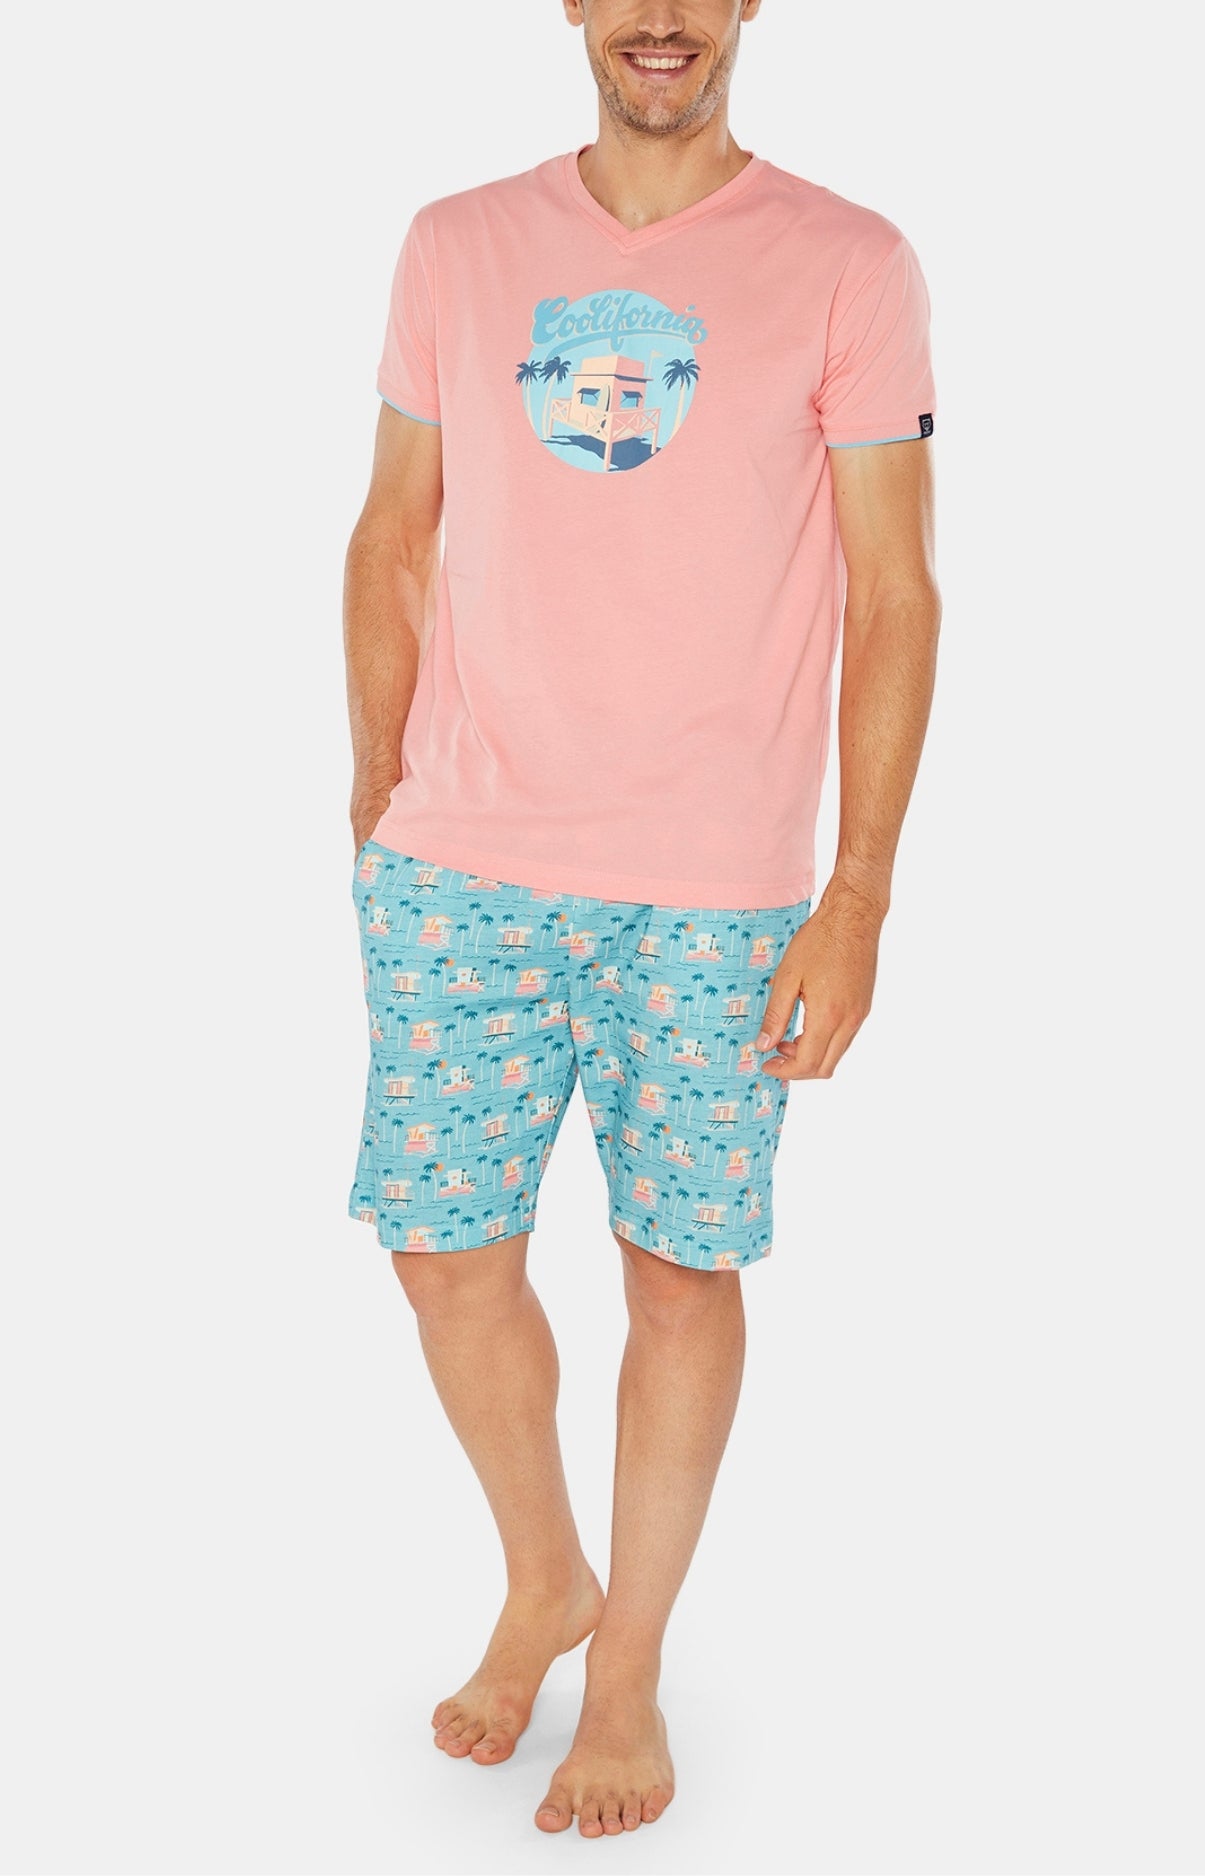 Coolifornia Pajama Shorts